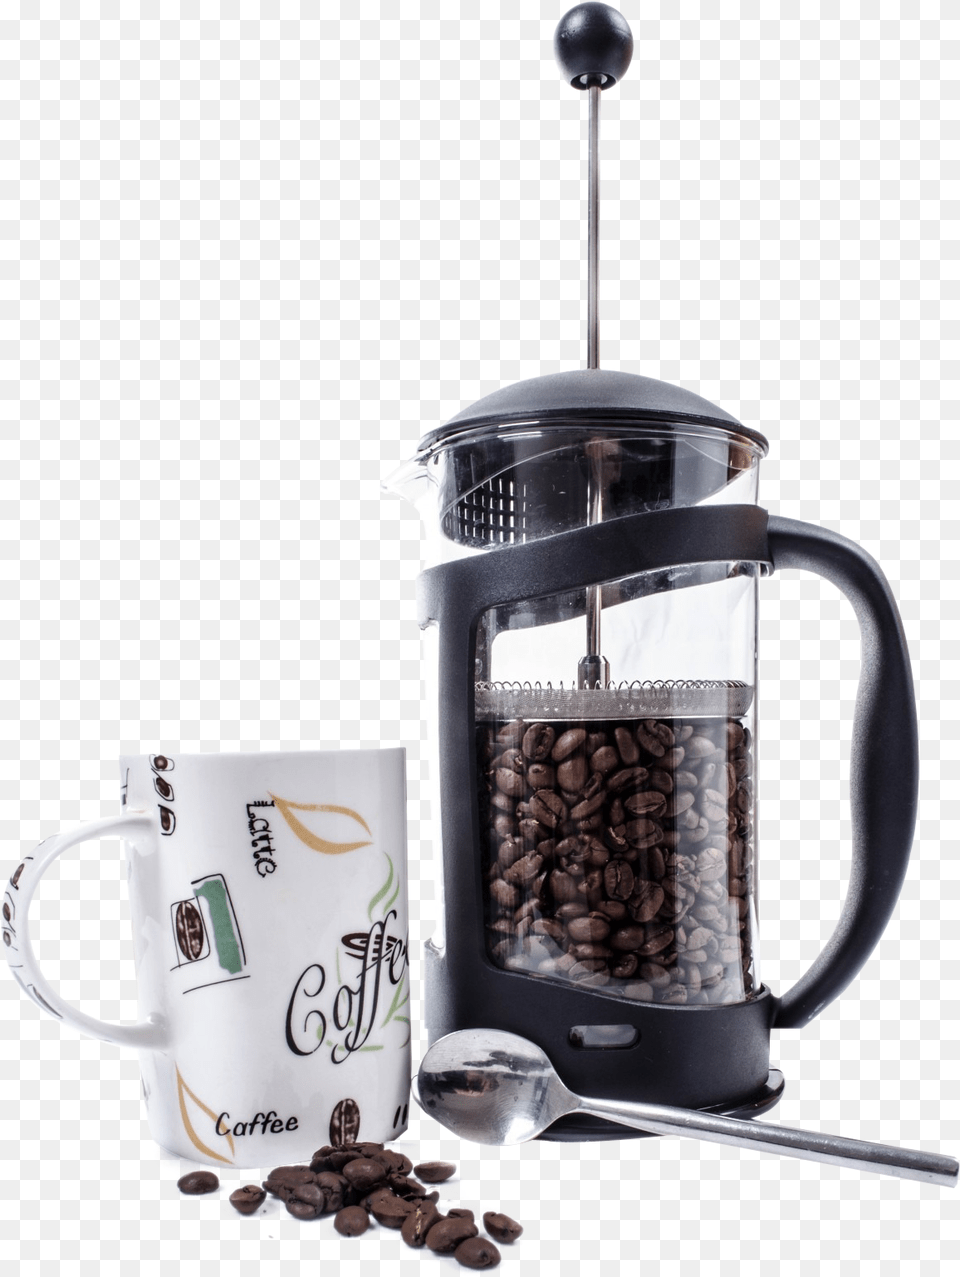 Coffee Grinder And Coffee Cup Coffee Grinder, Cutlery, Spoon, Beverage, Coffee Cup Free Png